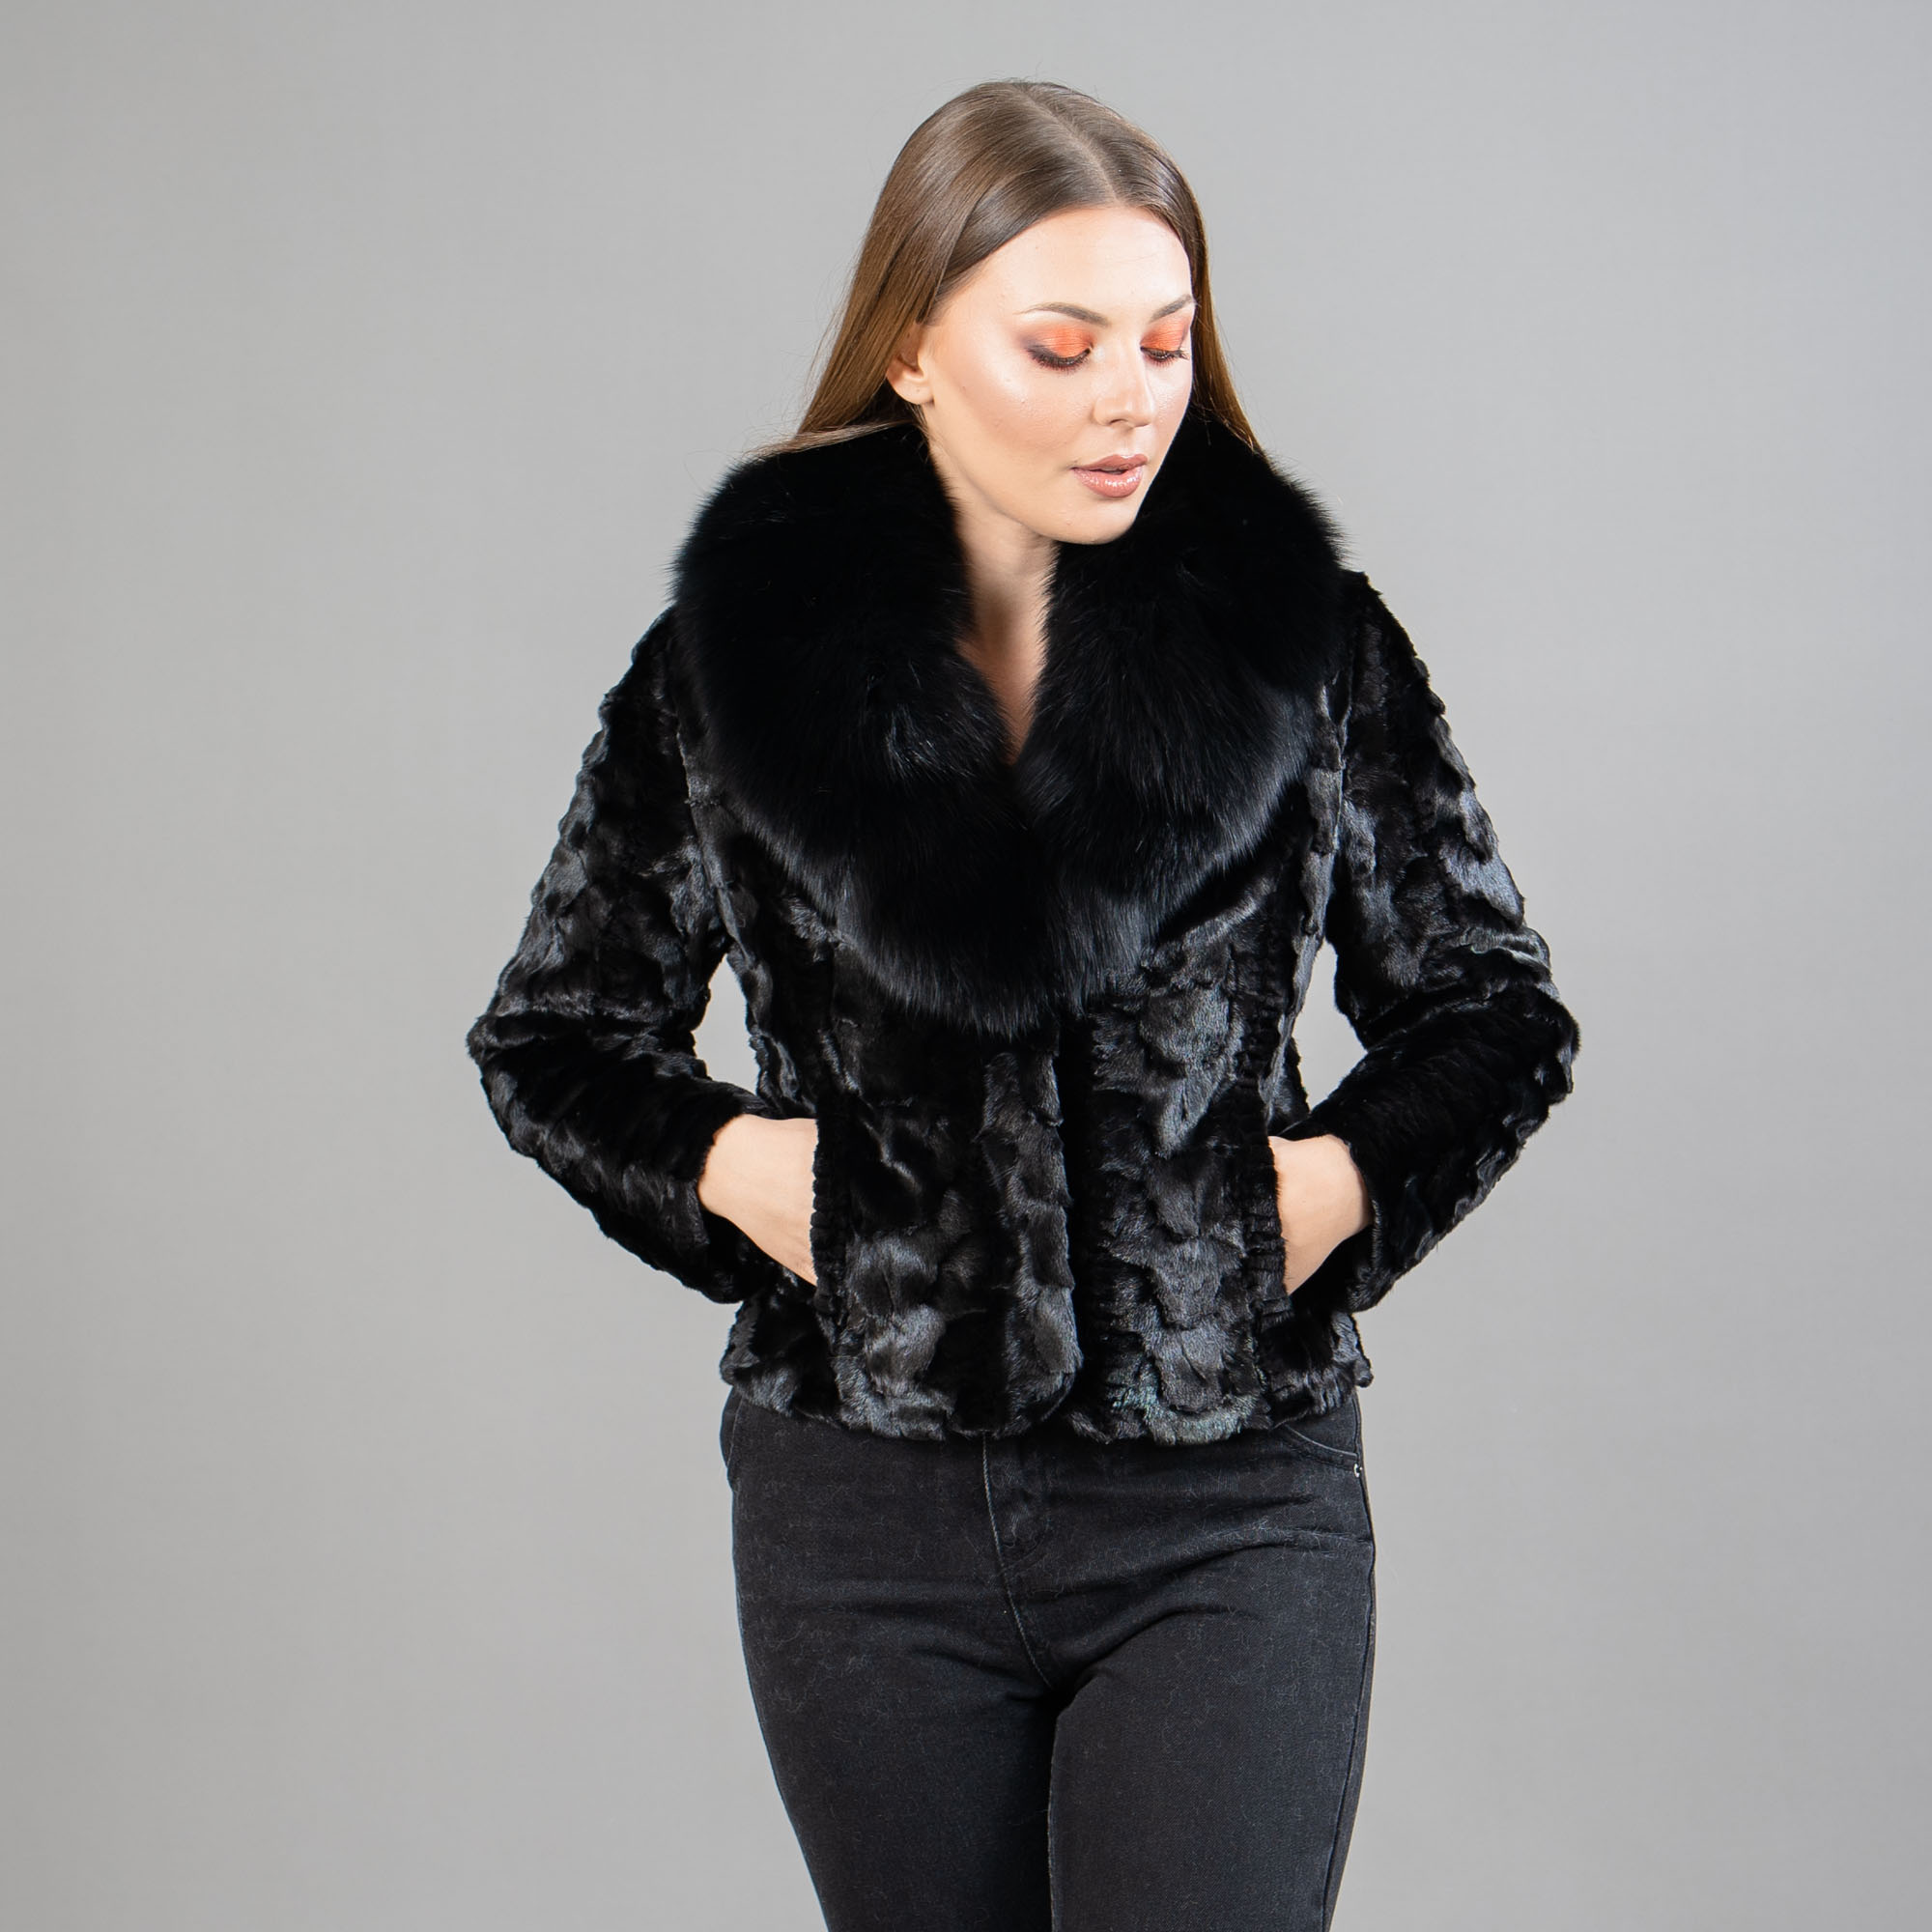 black mink fur jacket with a collar